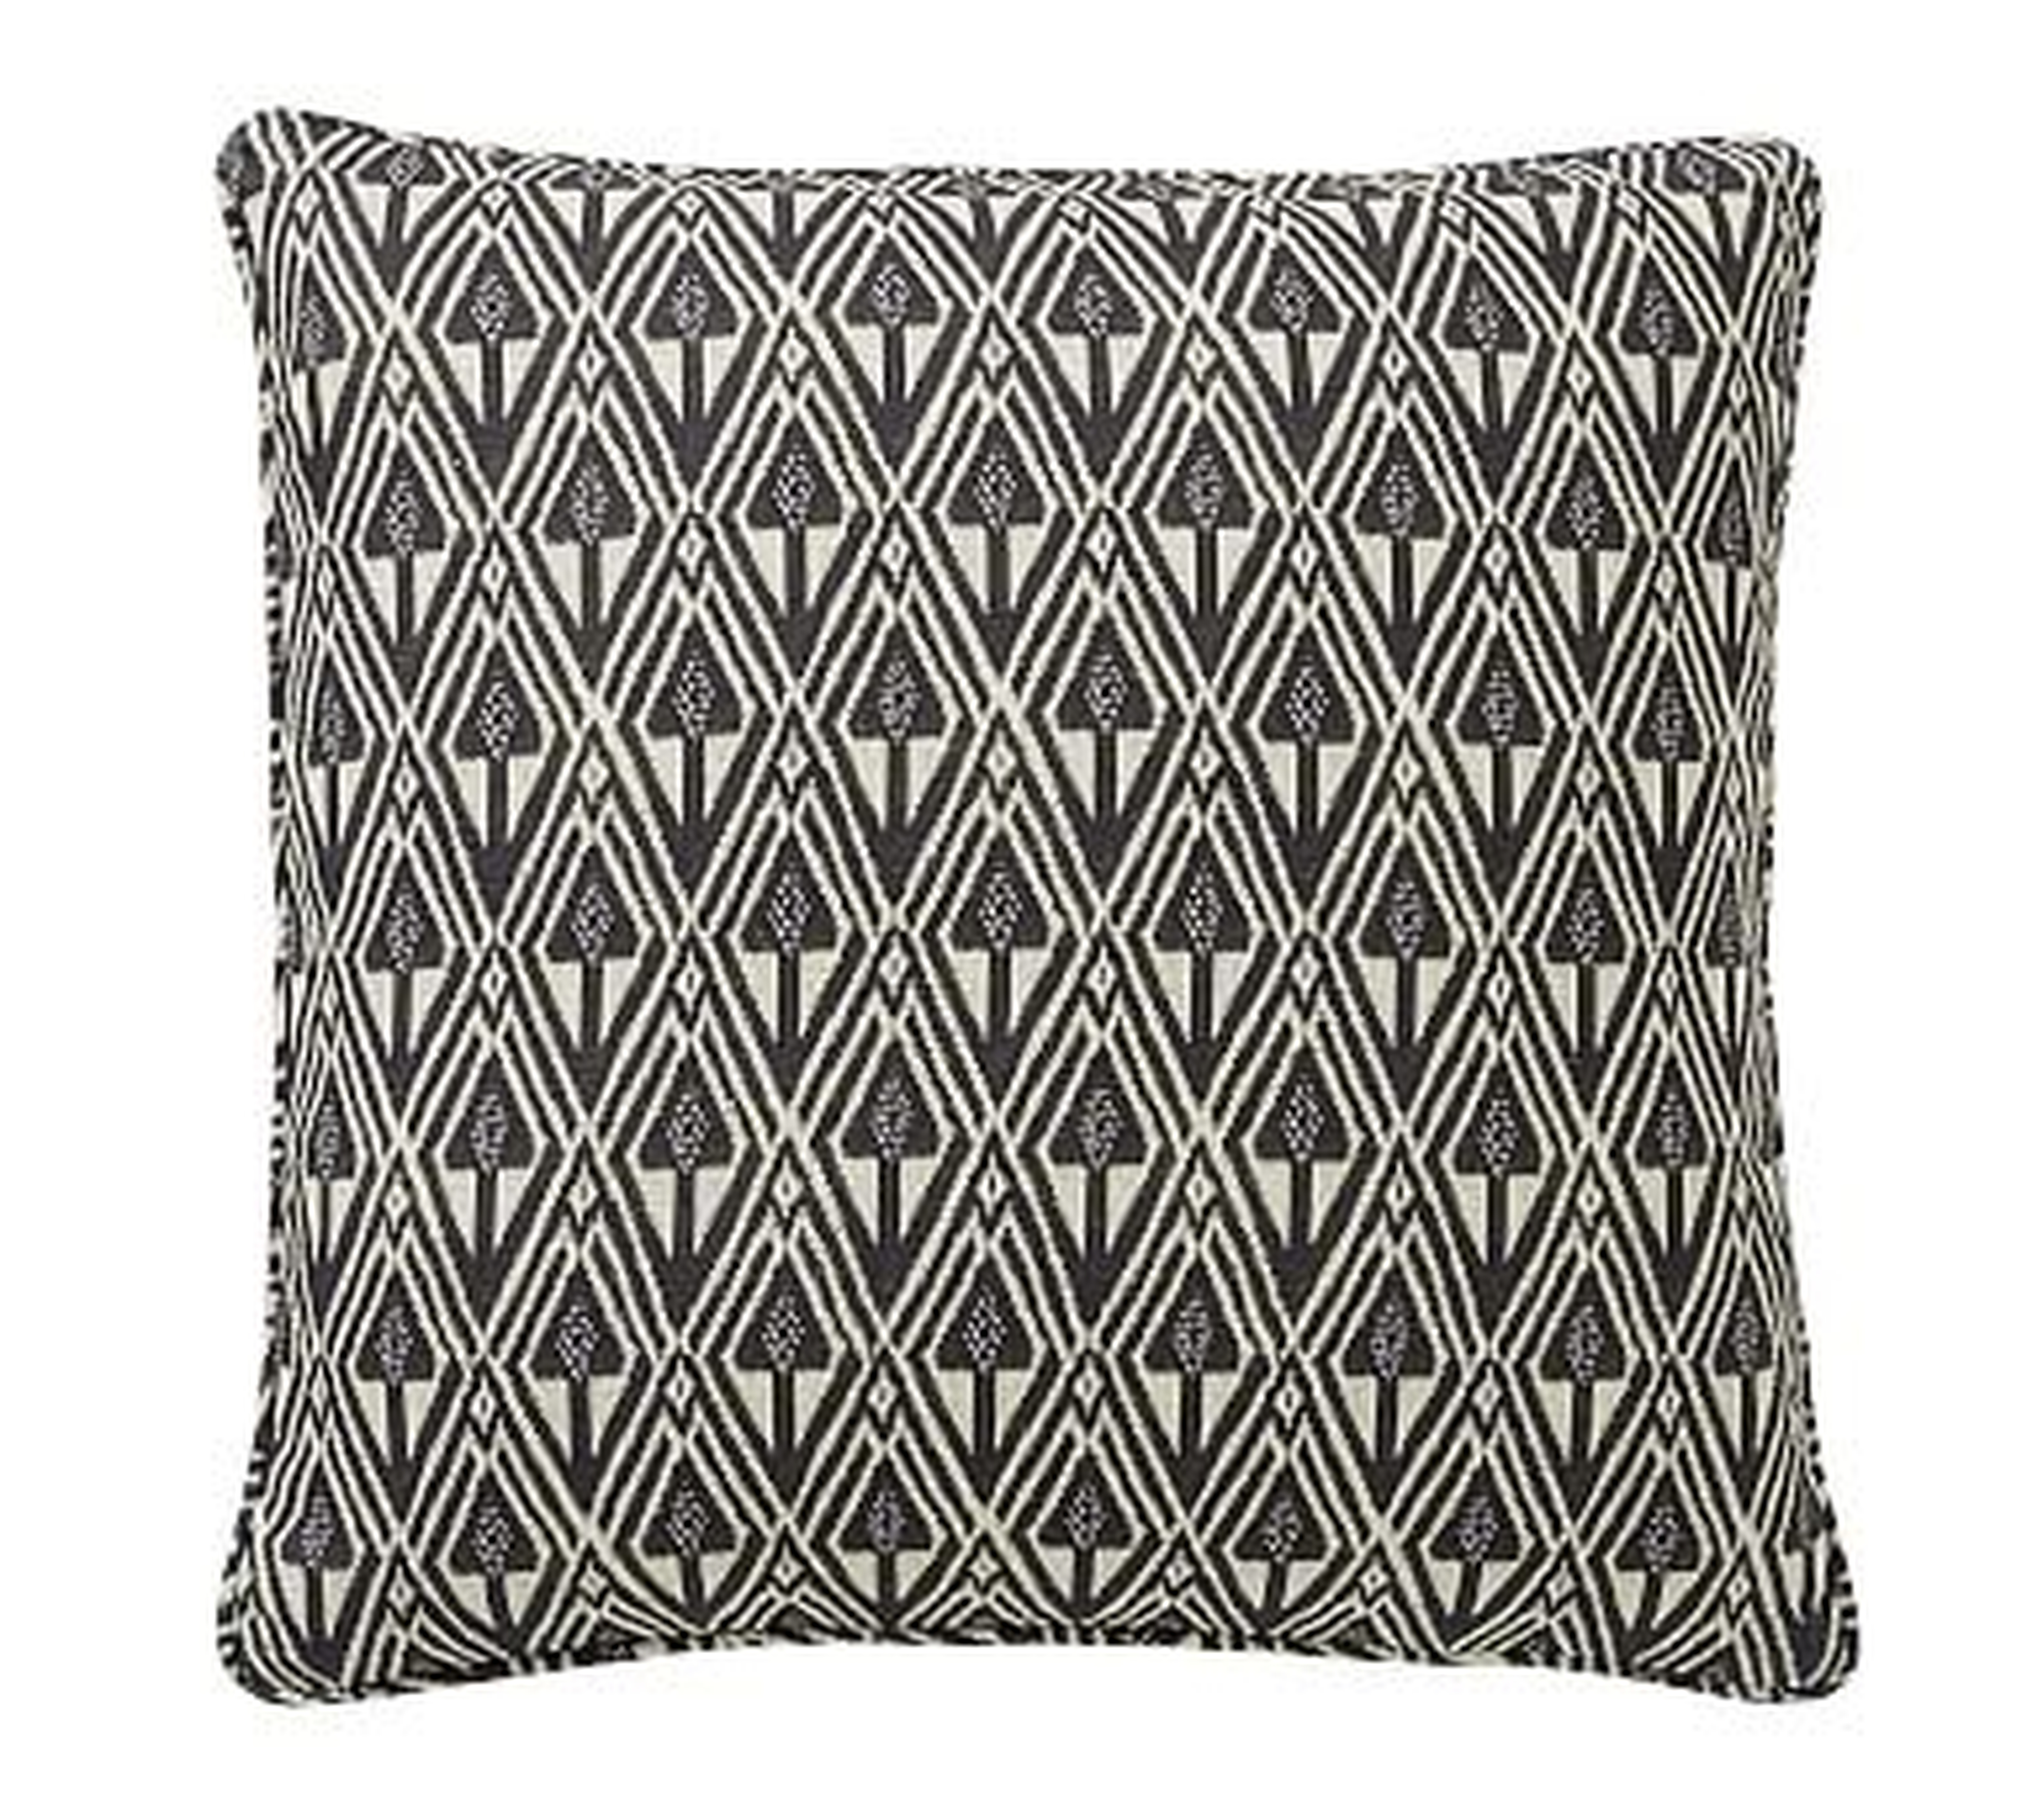 Mitzi Print Pillow Cover, Charcoal Multi, 20" - Pottery Barn